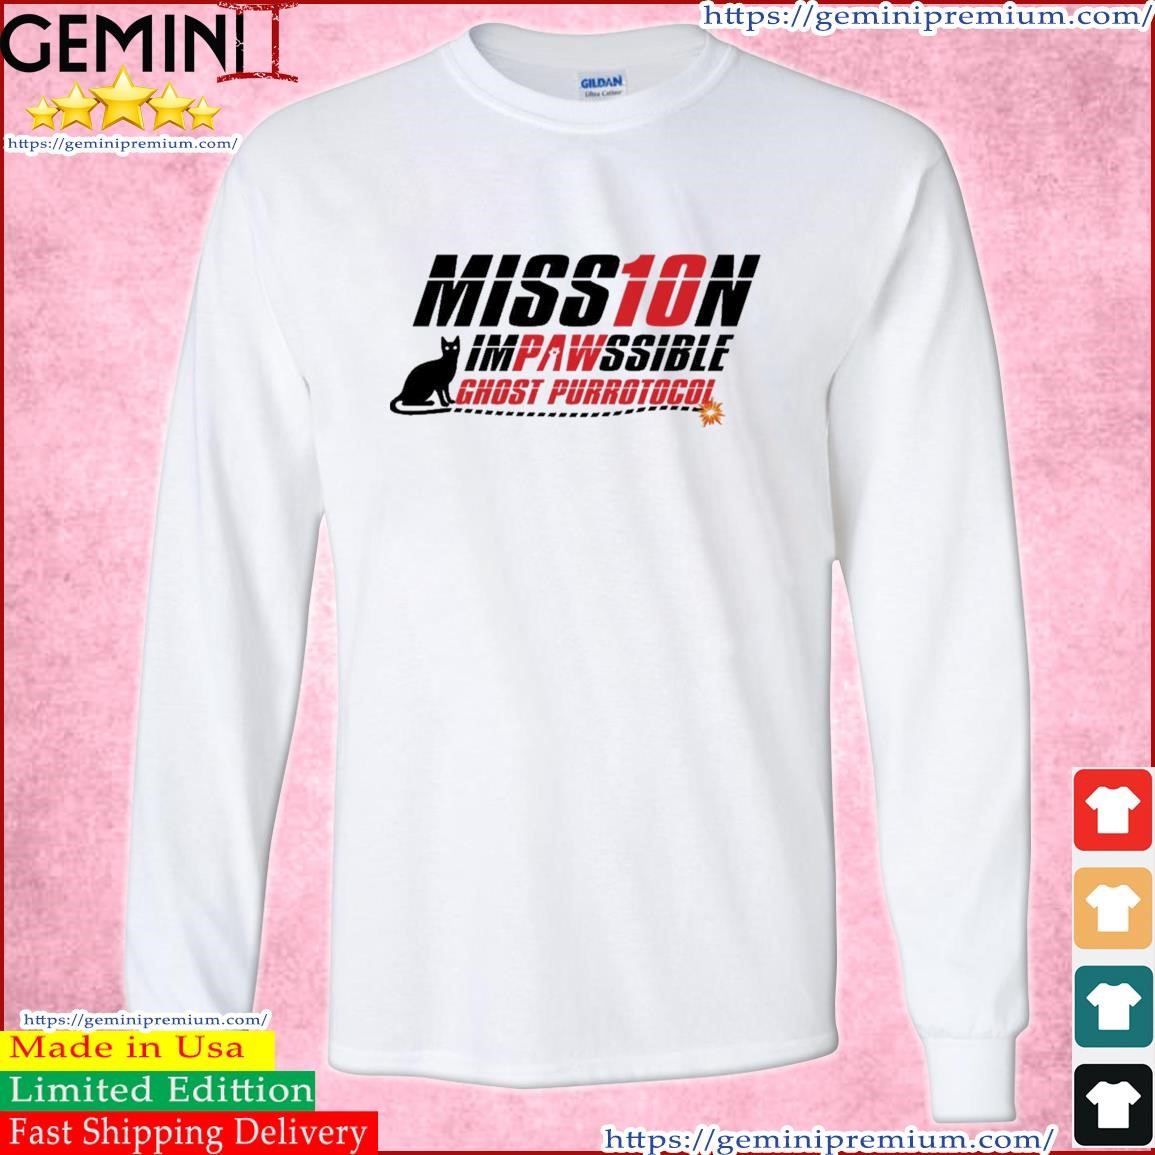 Mission Impawssible Tom Cruise Cat Logo Shirt Long Sleeve Tee.jpg